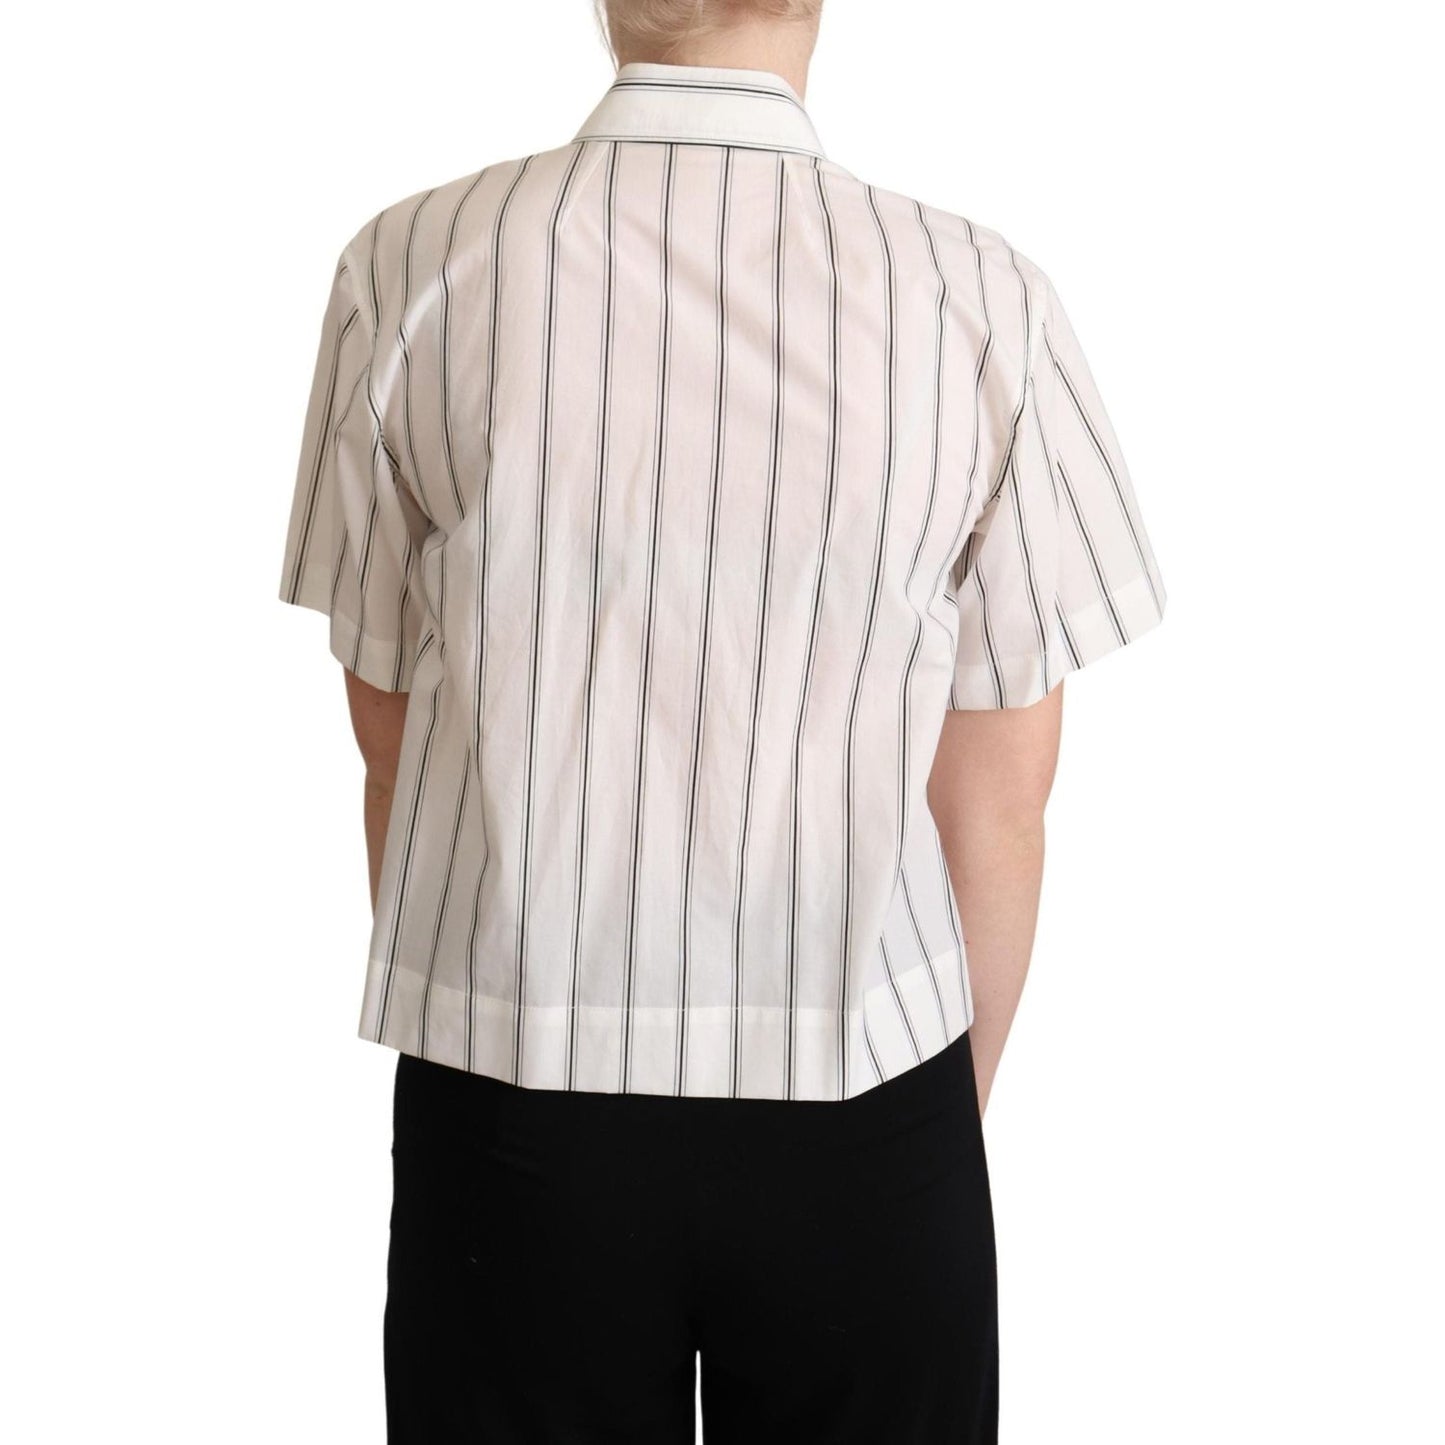 Dolce & Gabbana Elegant Striped Cotton Polo Top white-black-stripes-collared-shirt-top